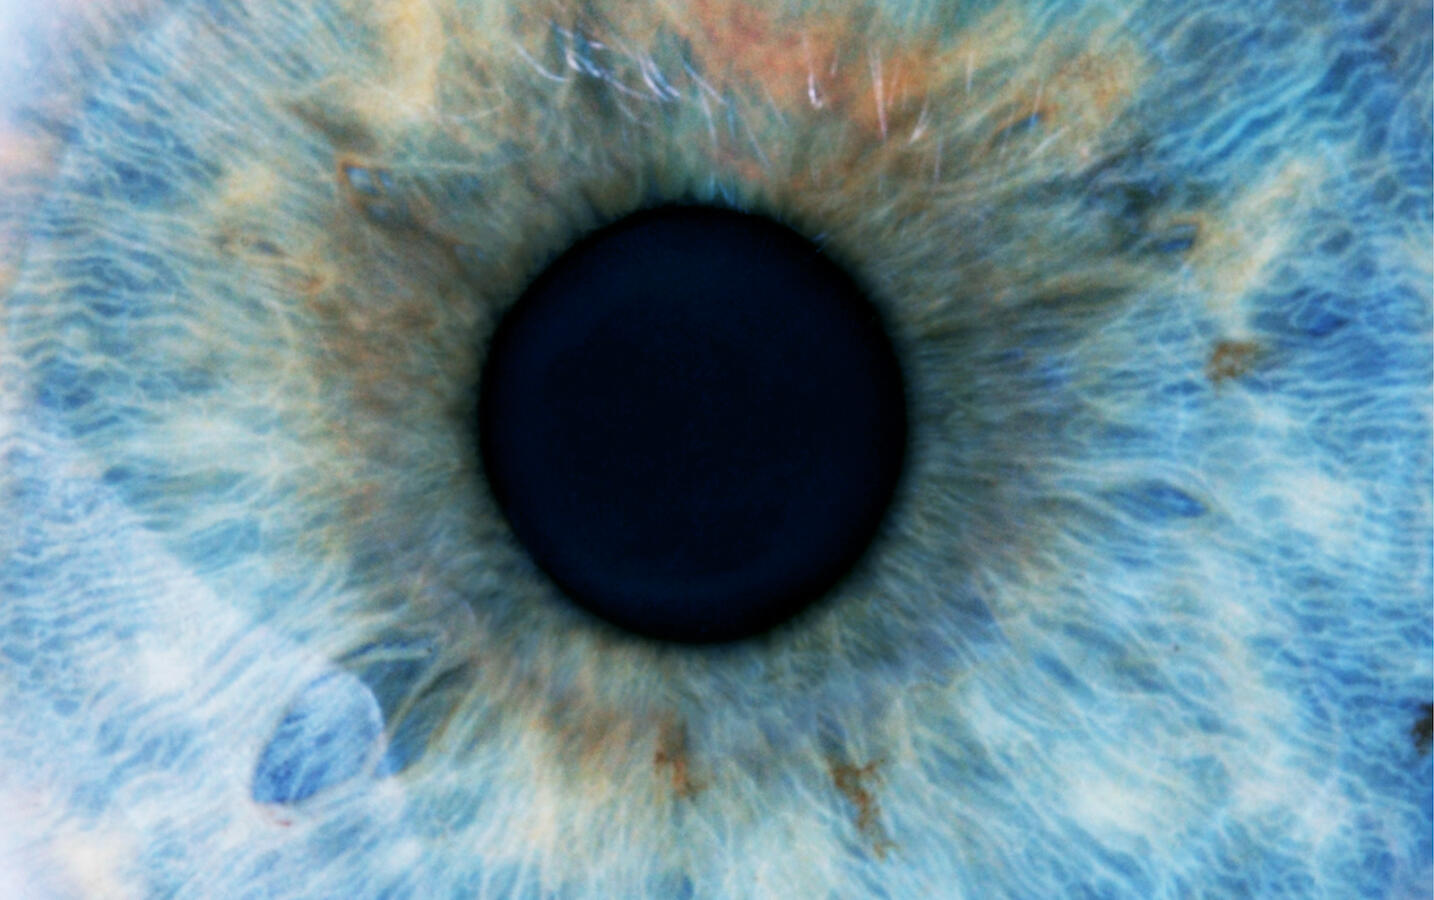 Dilated blue eye super close up